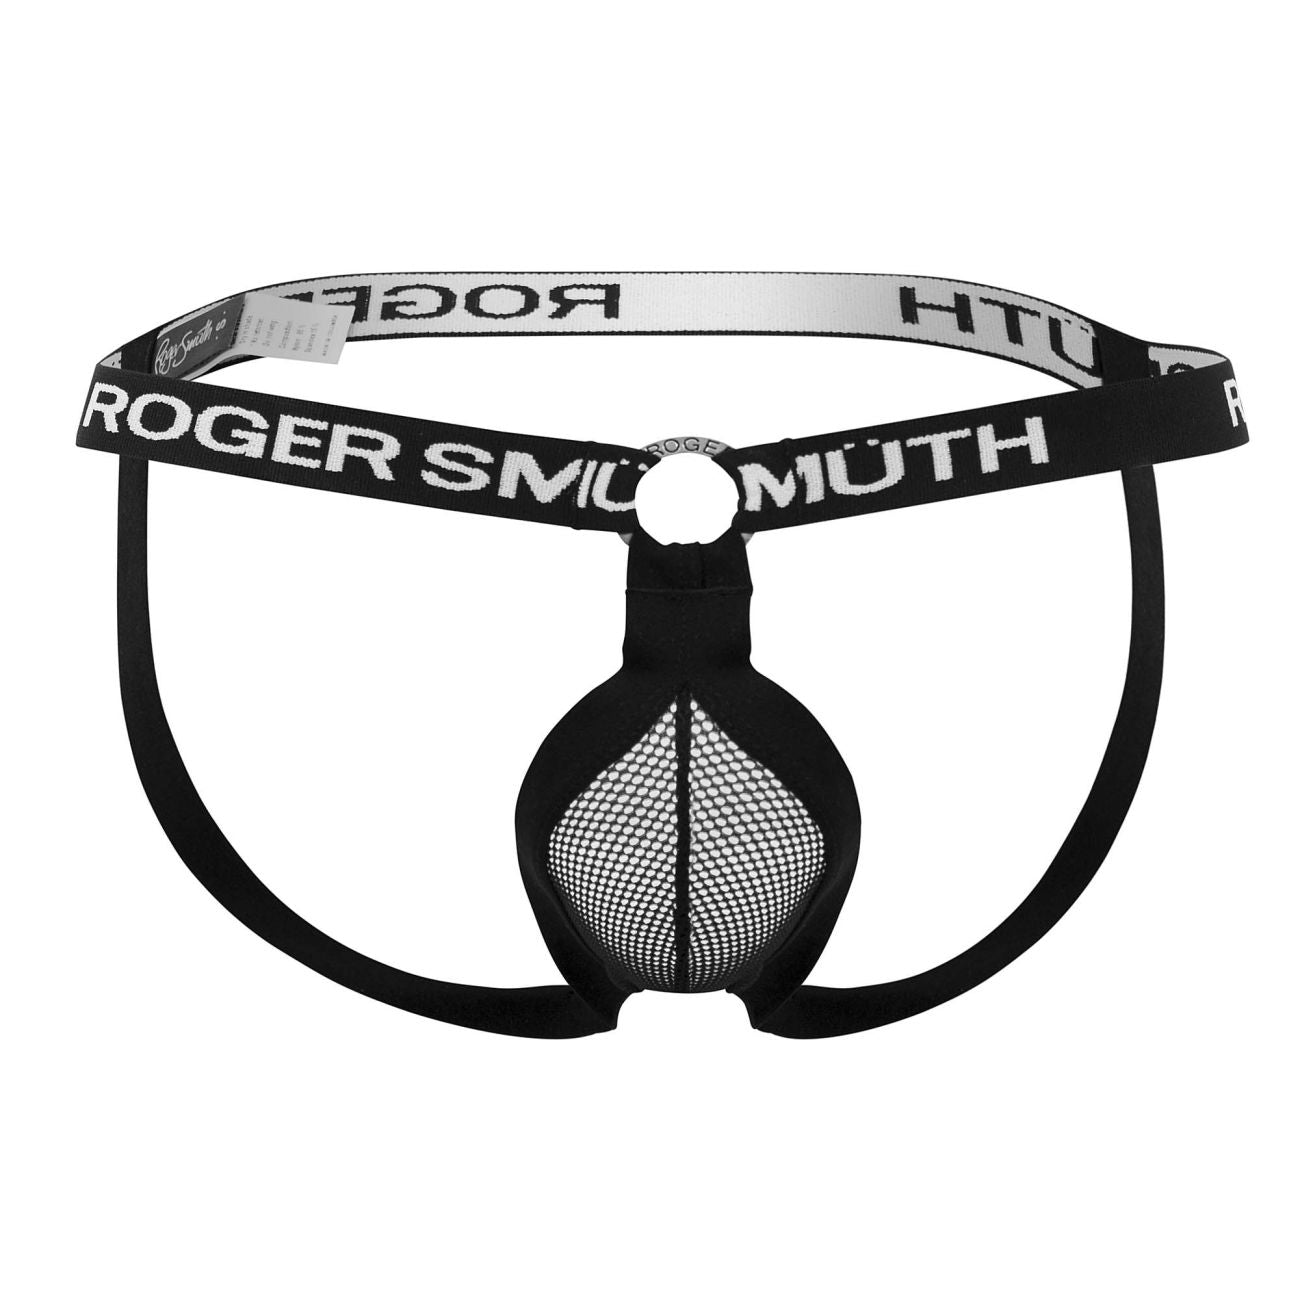 Roger Smuth RS063 Jockstrap Black